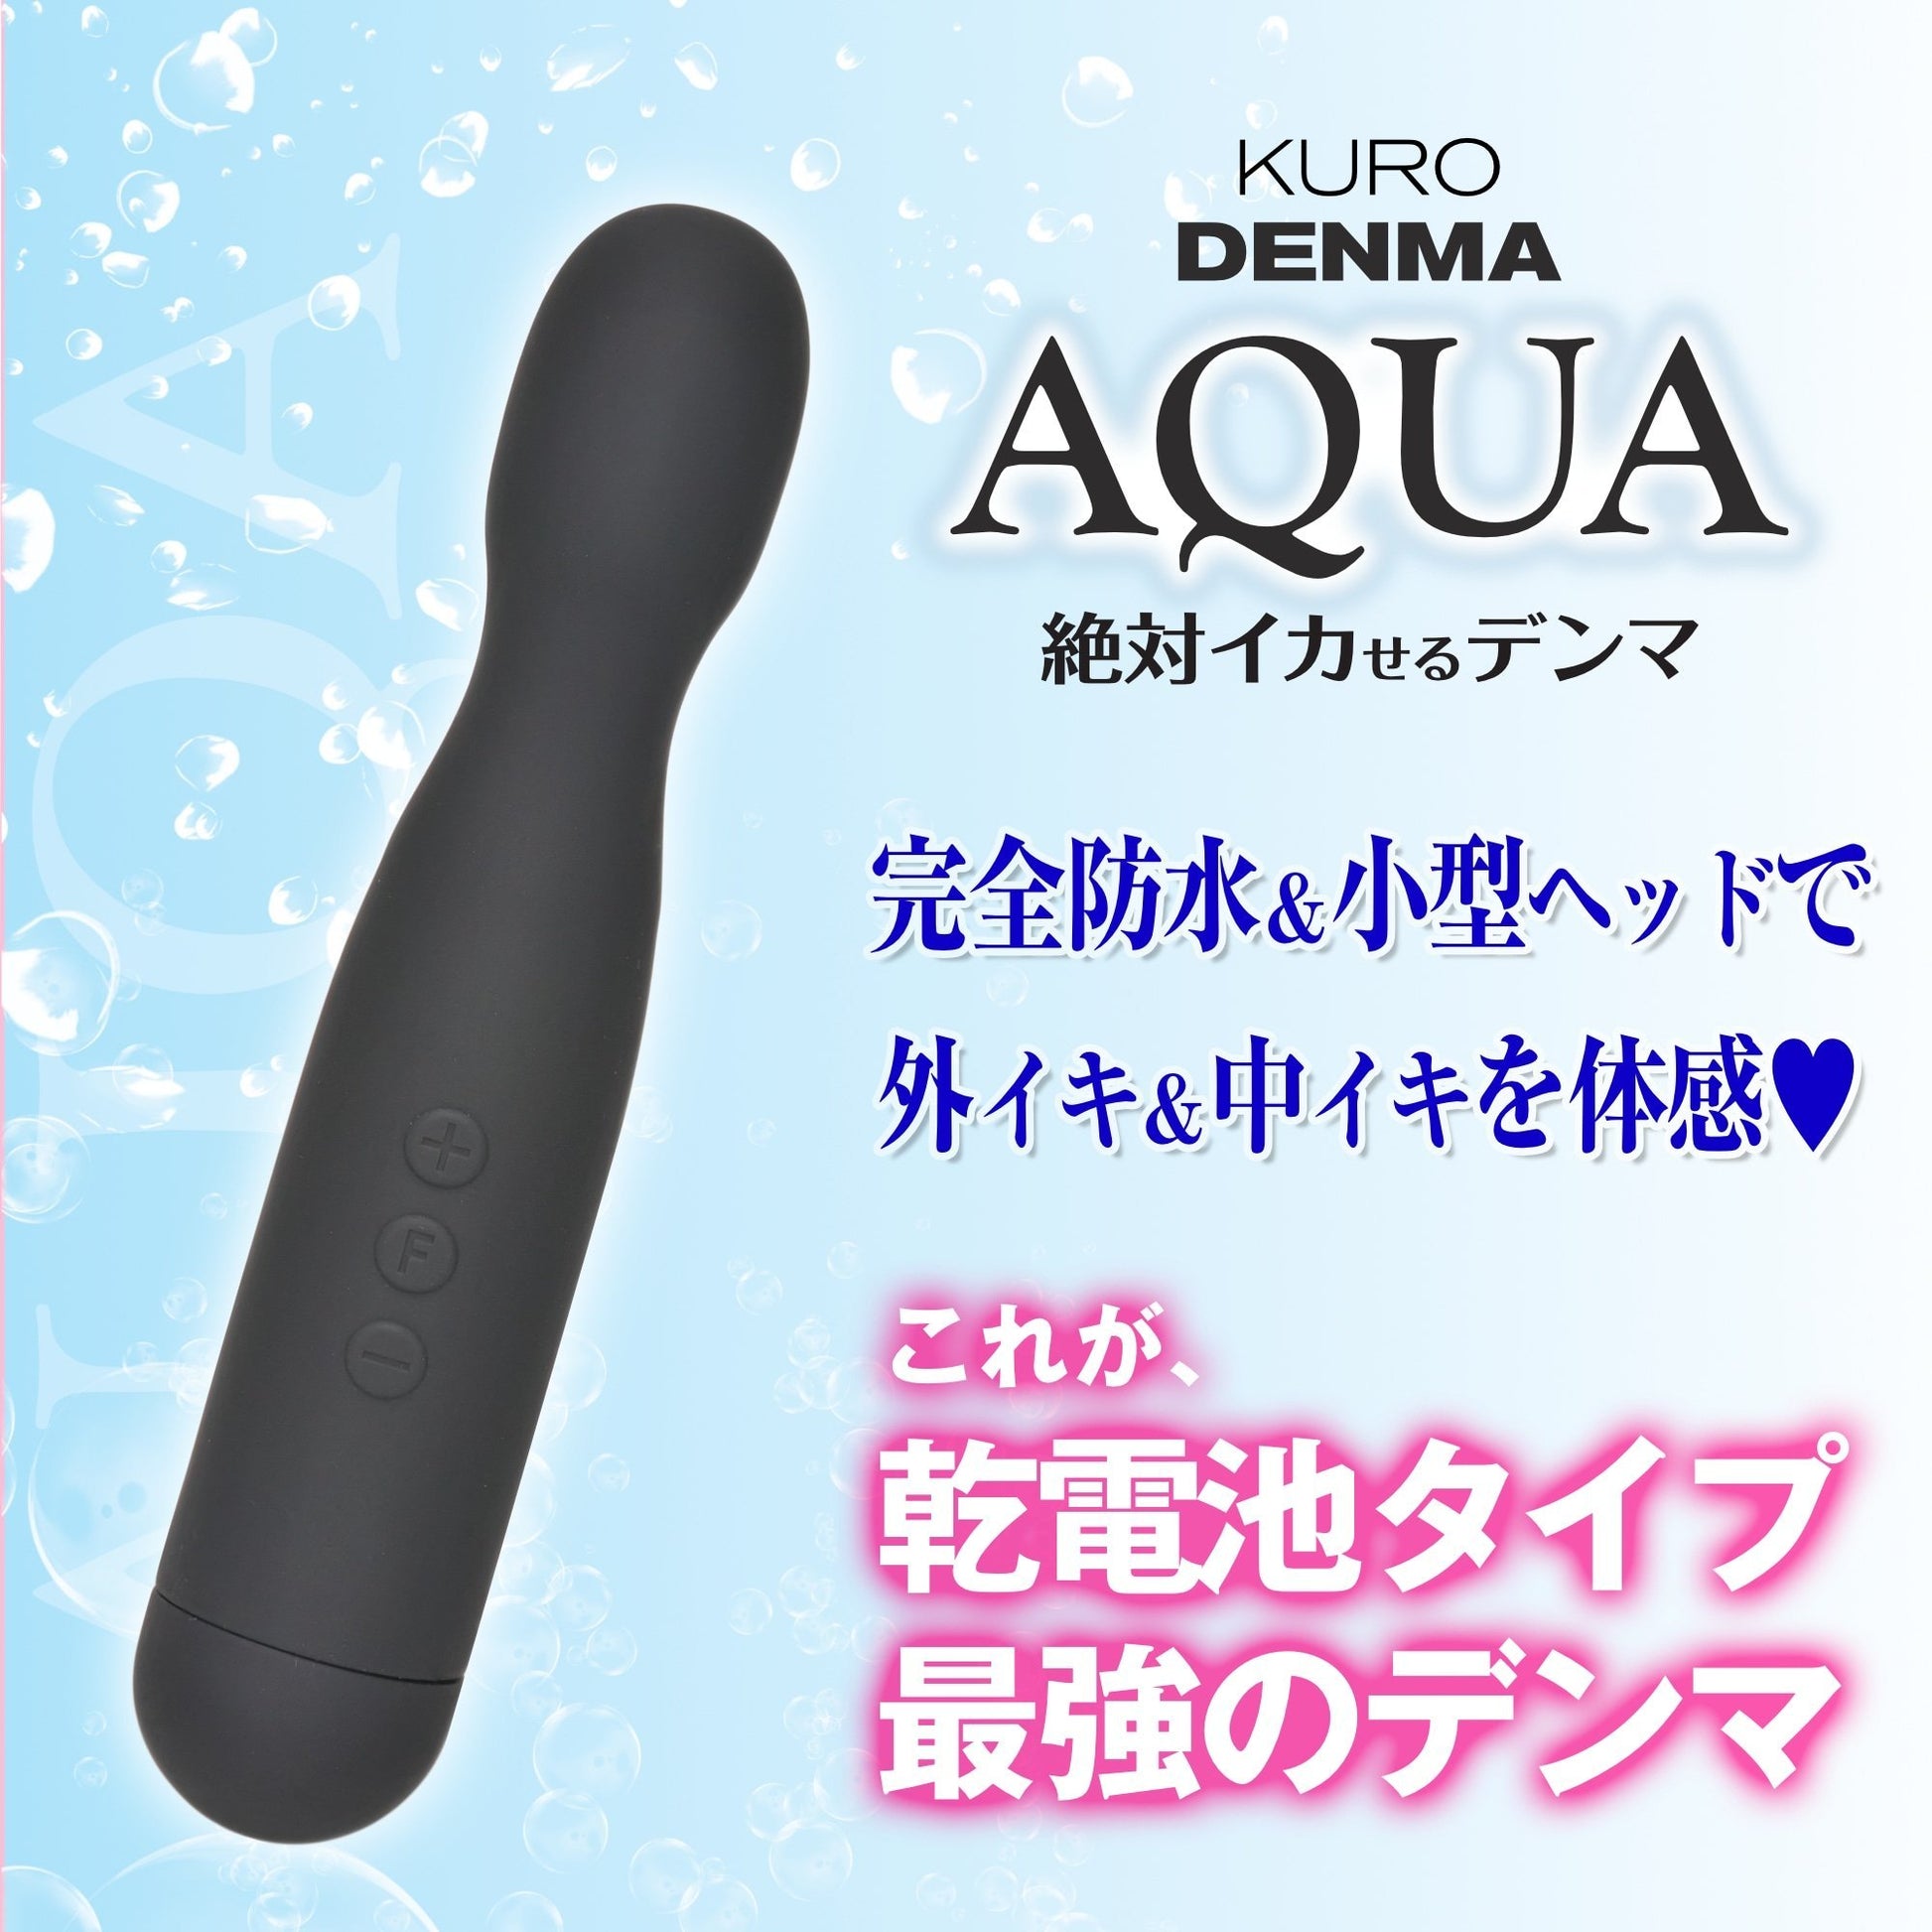 WILD ONE 絕對潮吹 Kuro Aqua Denma 小型按摩棒 中小型 AV 按摩棒 購買